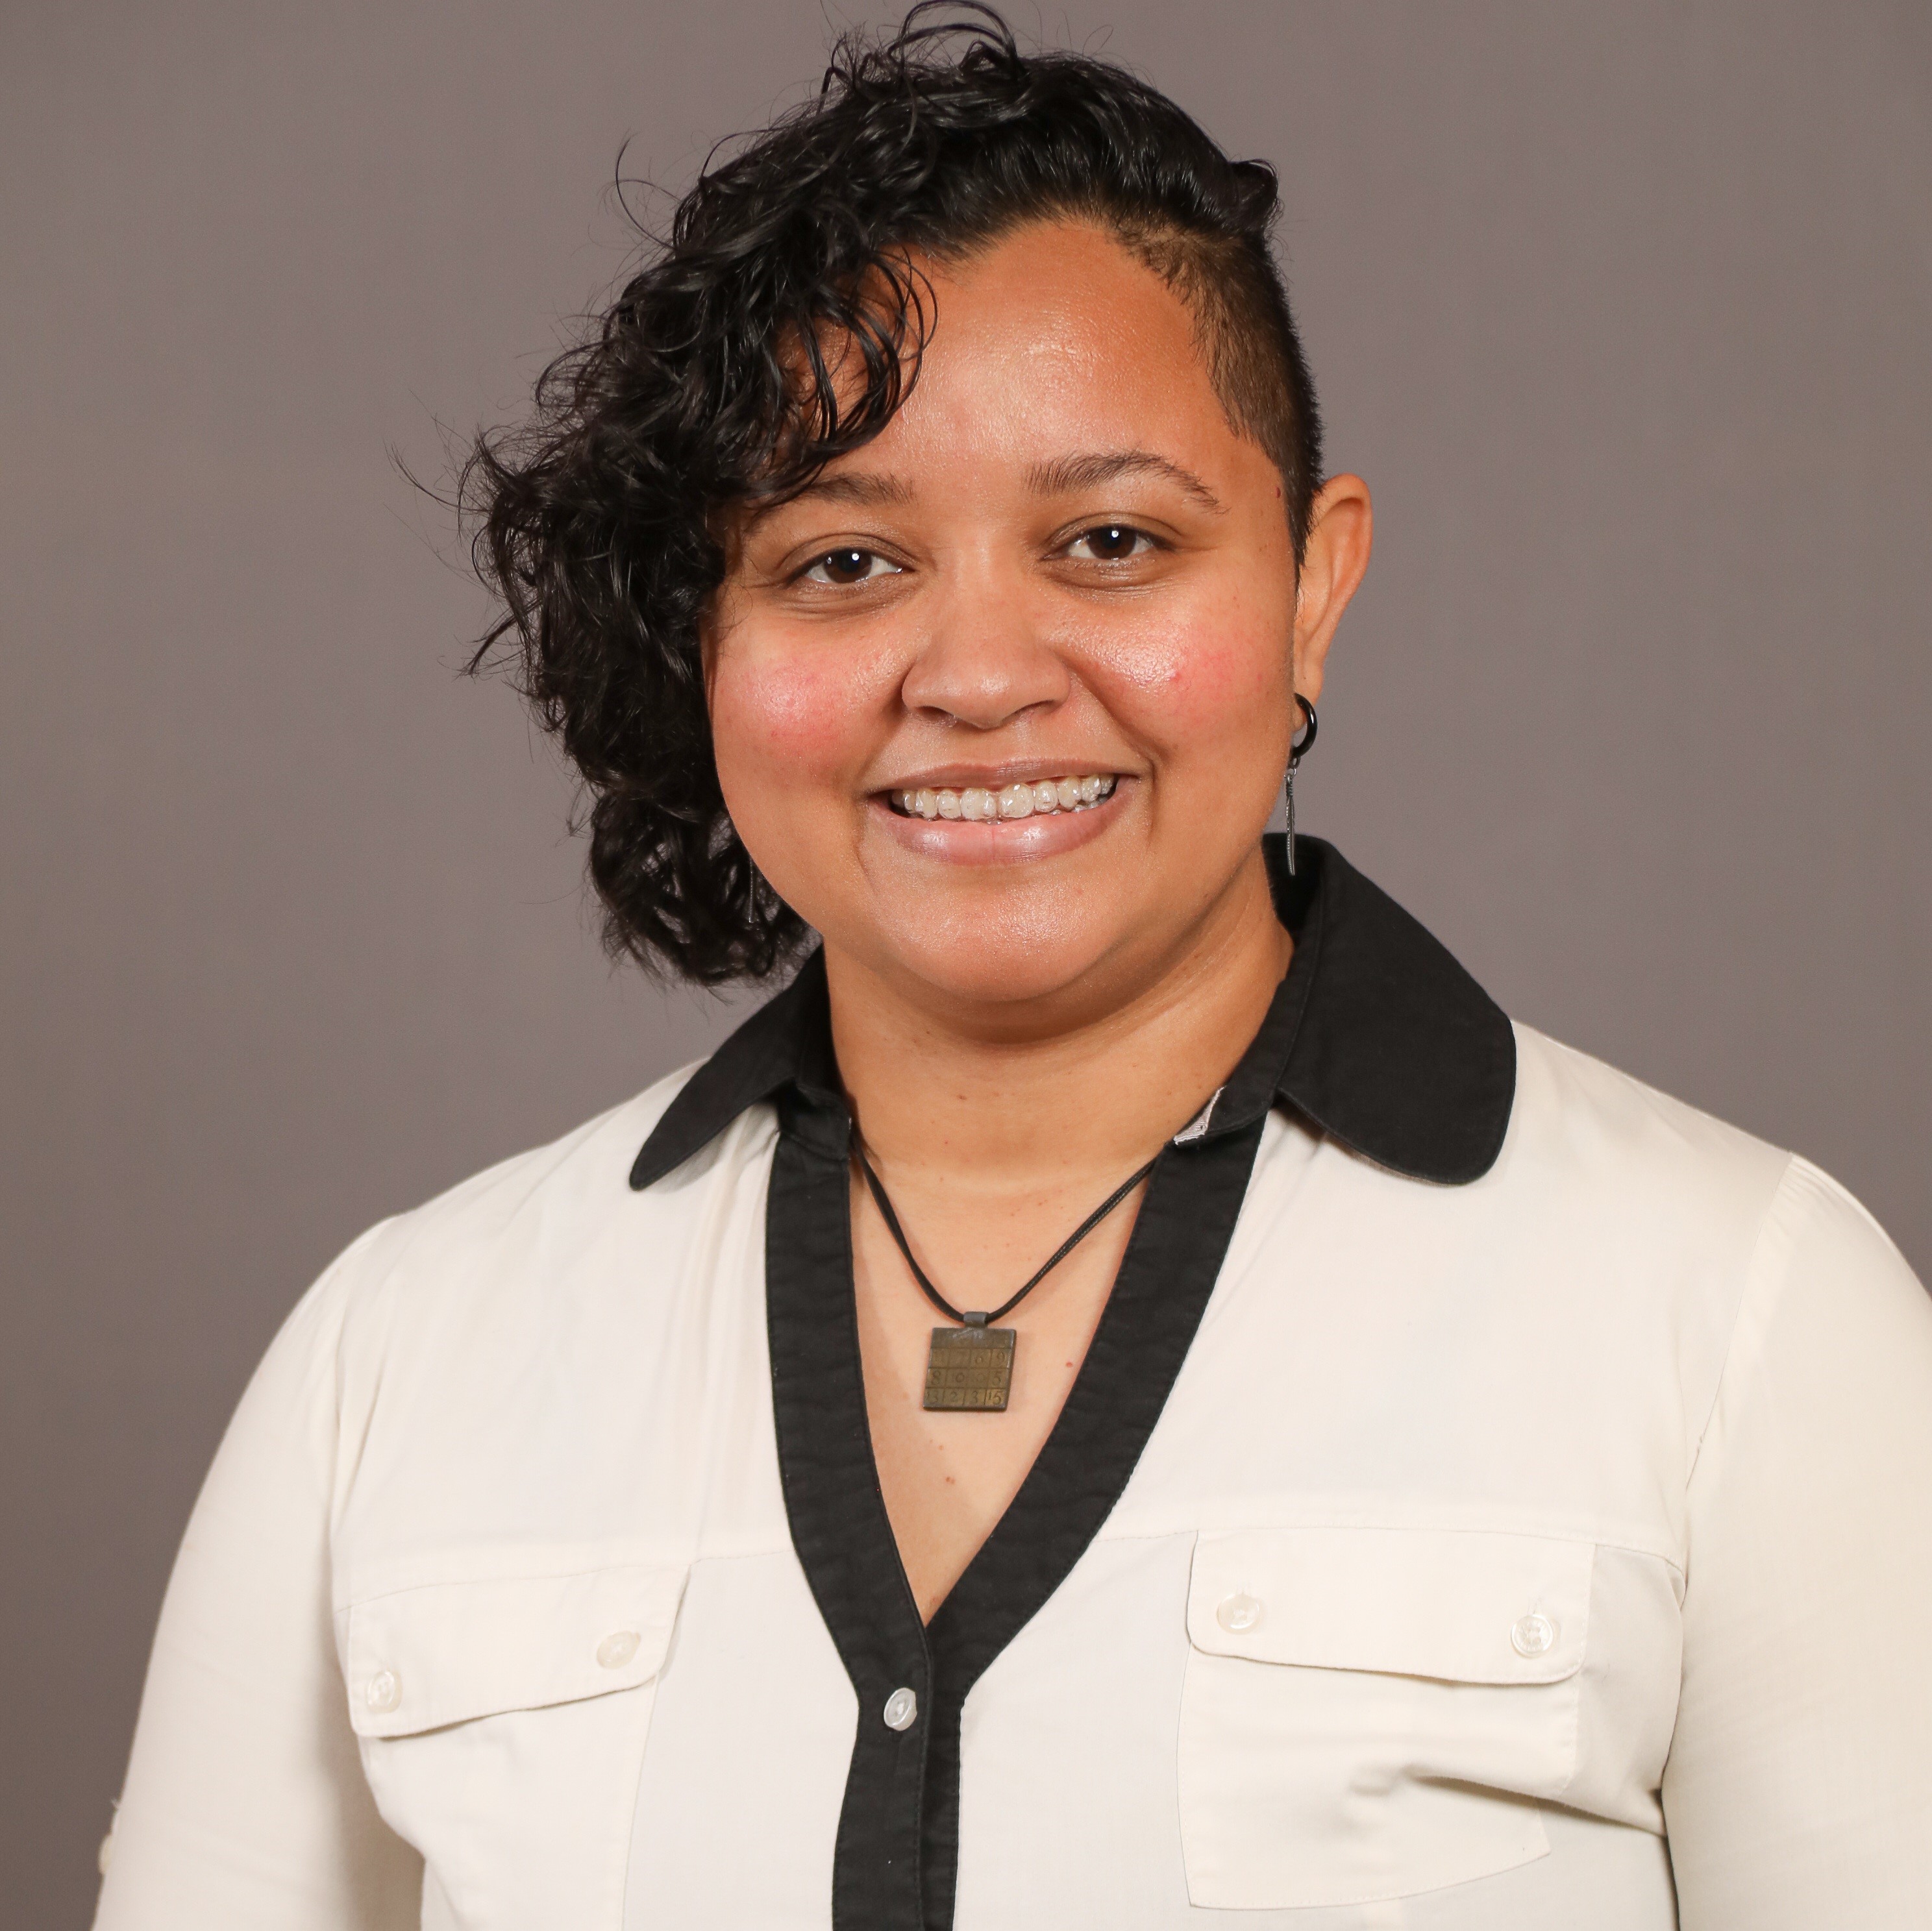 Profile photo of Dr. Ana M. Mejia, 